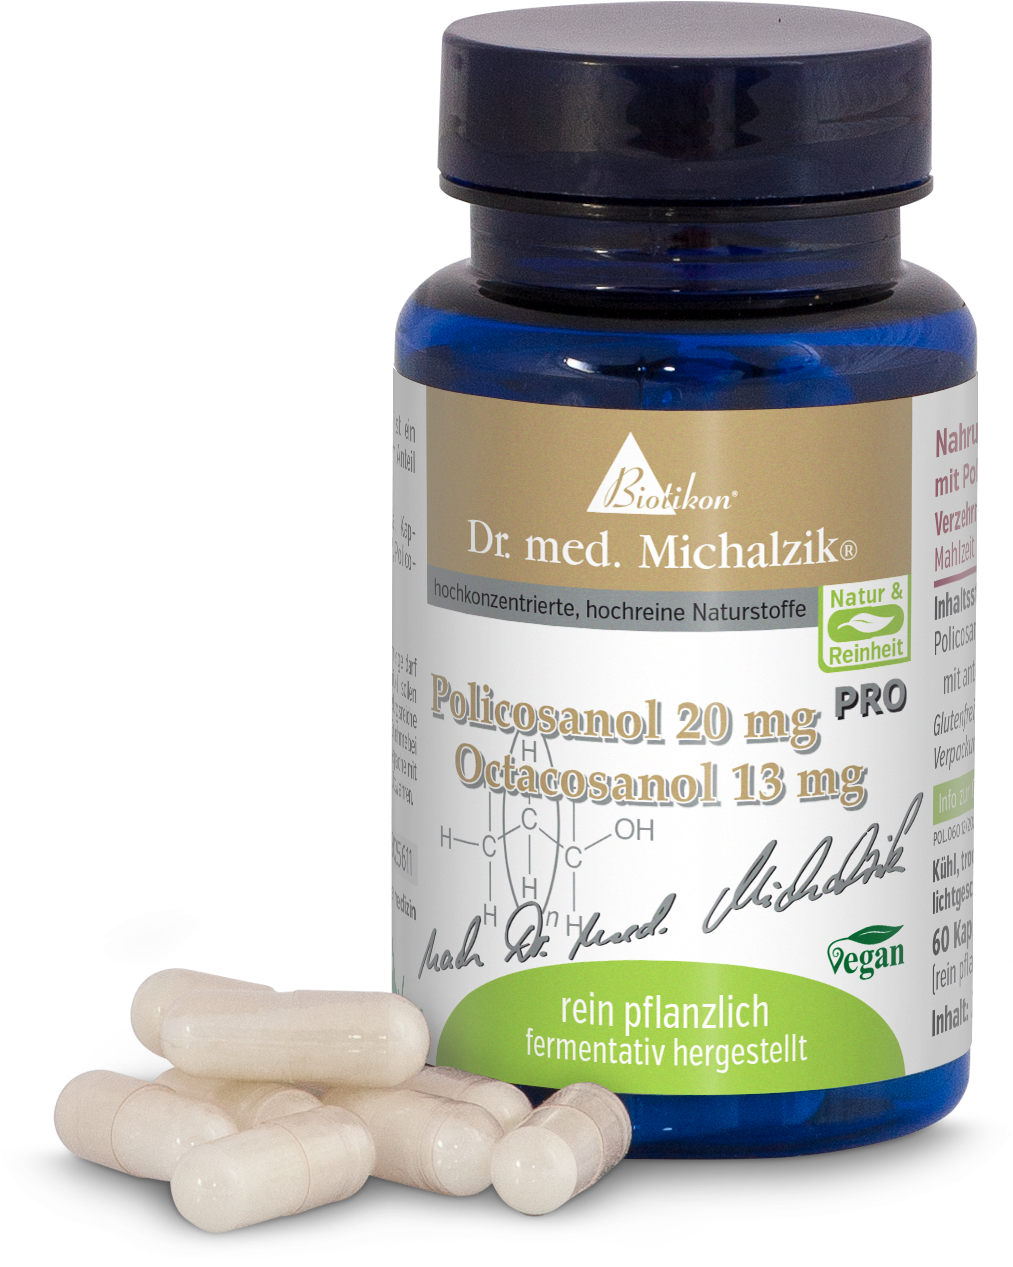 Policosanol 20 mg PRO Octacosanol 13 mg by Dr. Michalzik